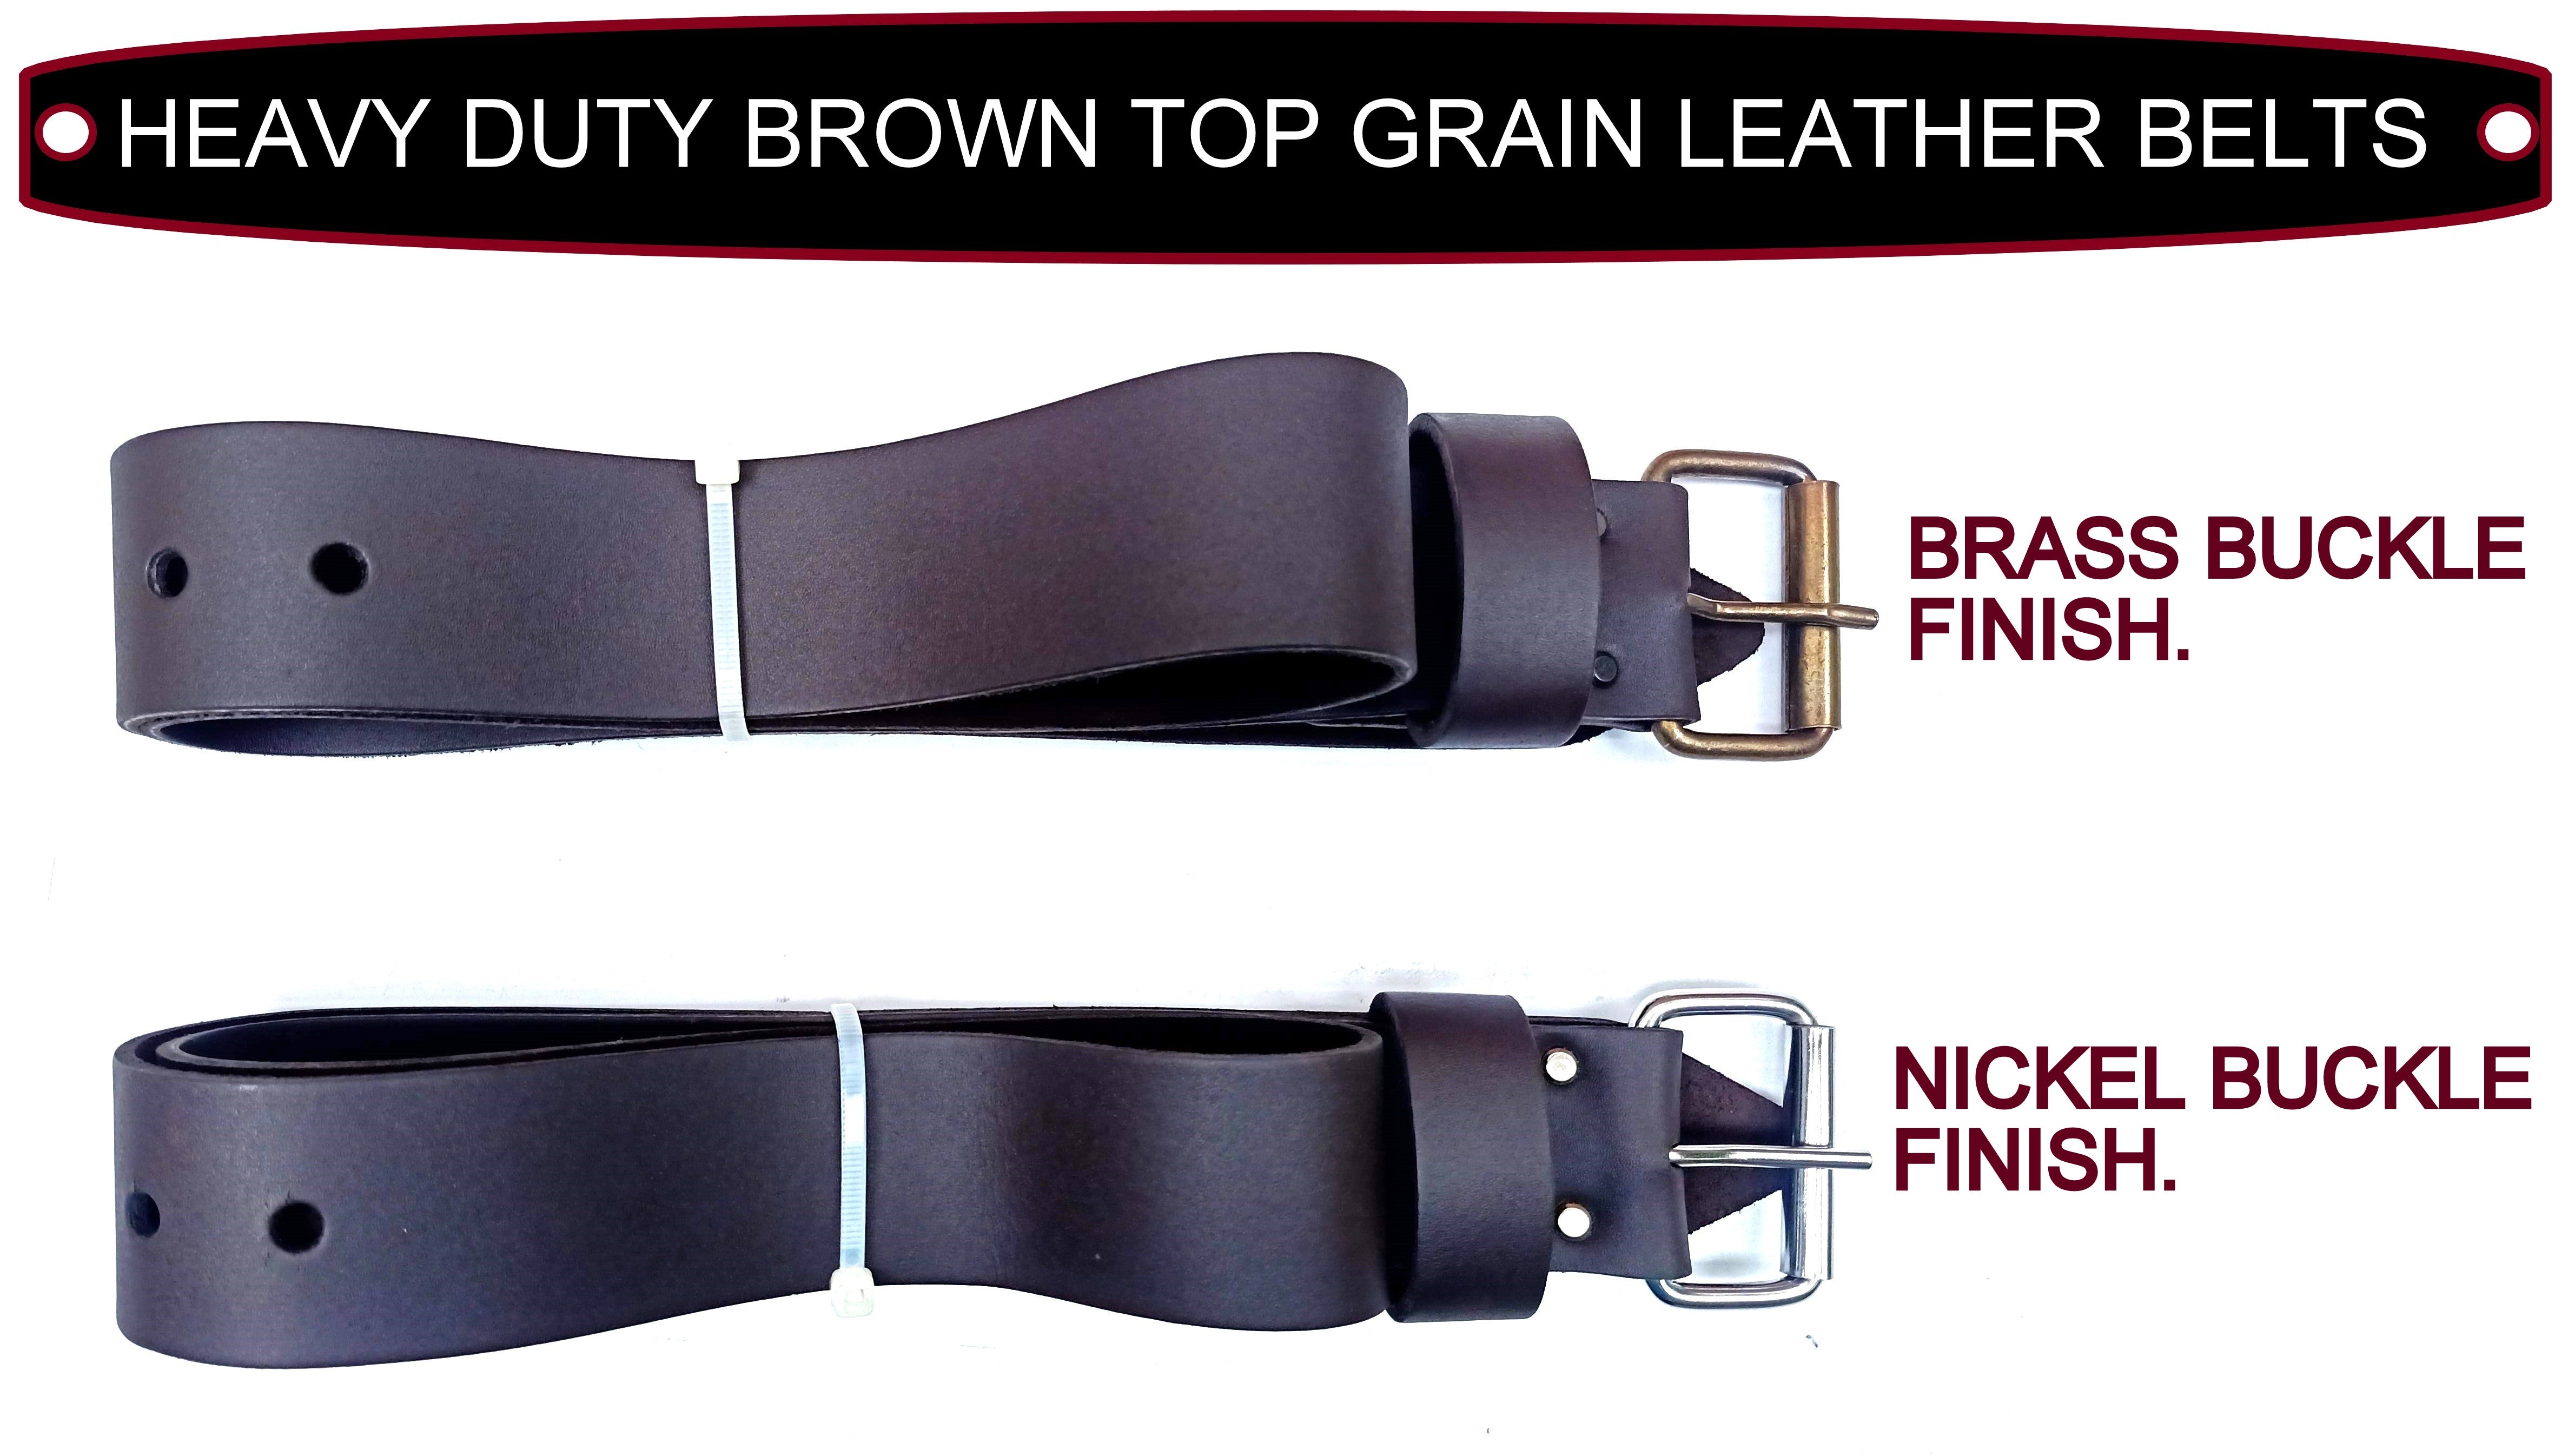 The Belt - Brown Grain, Brass Buckle